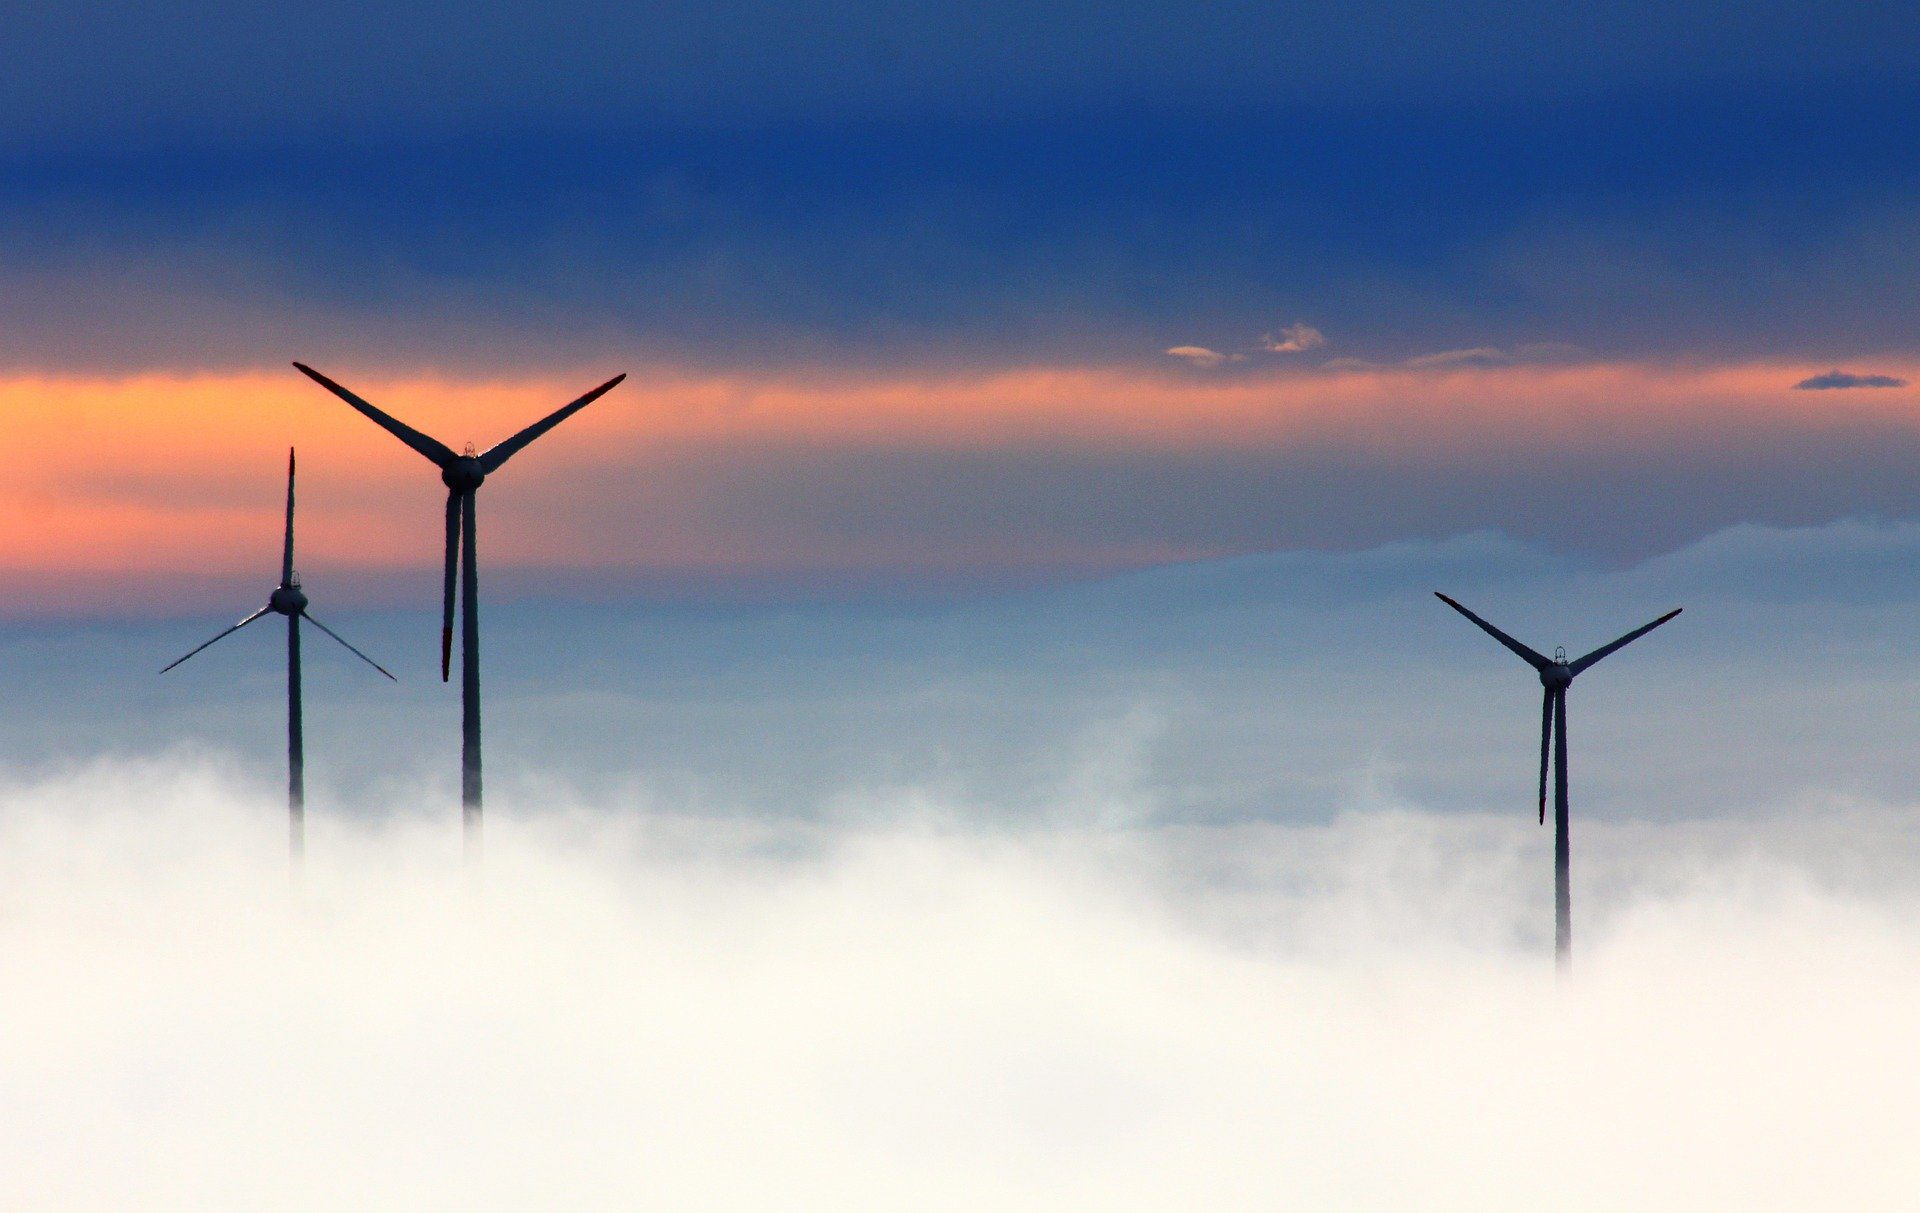 Wind turbines in the fog